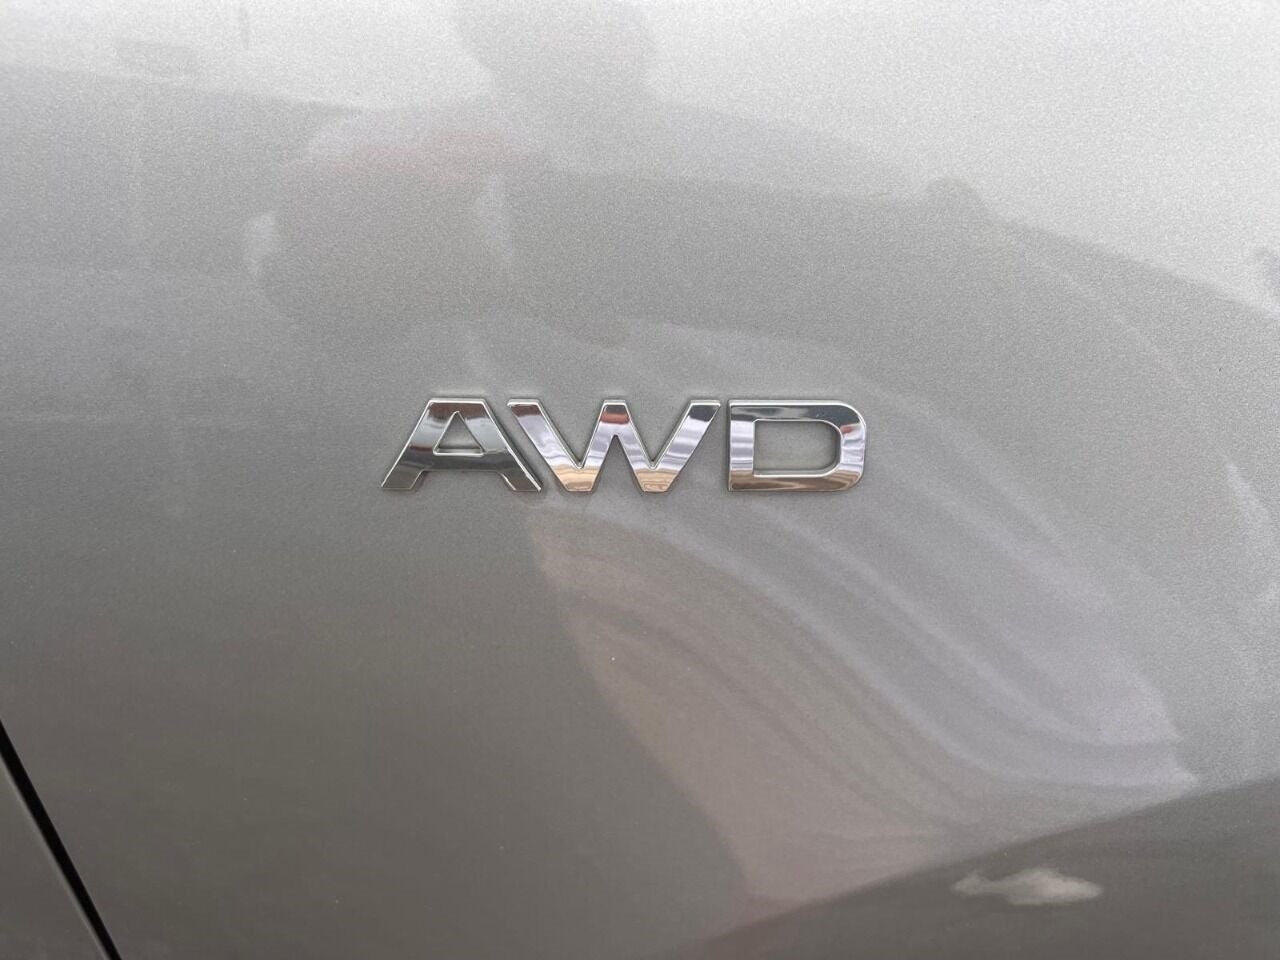 2019 Kia Sportage LX AWD 4dr SUV